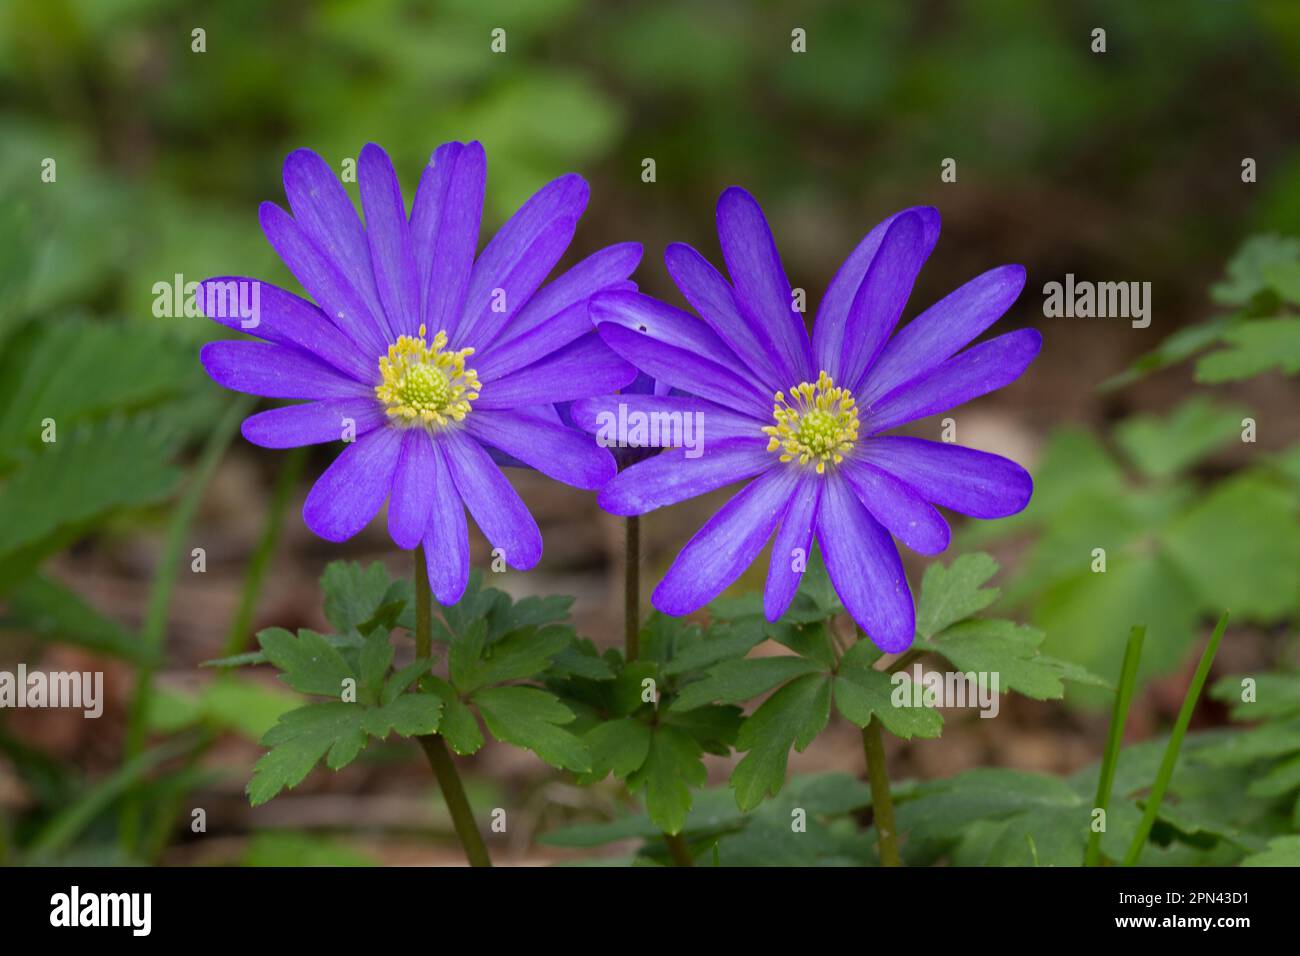 Two purple-blue flowers of Balkan anemone Stock Photo